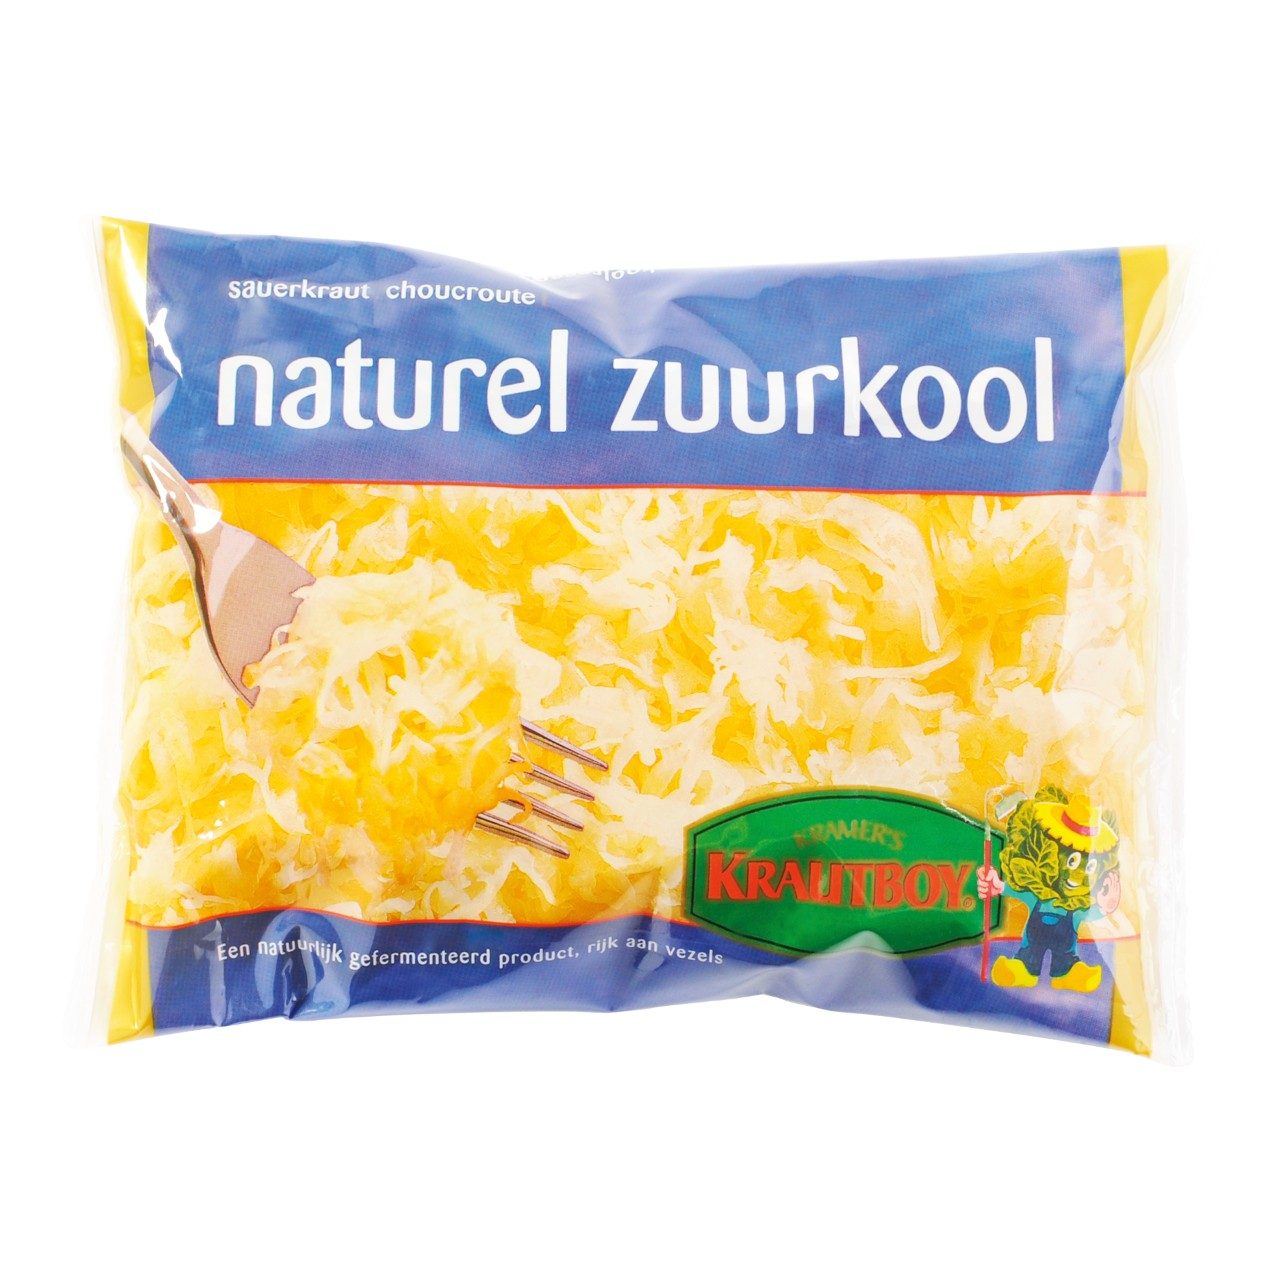 Naturel zuurkool